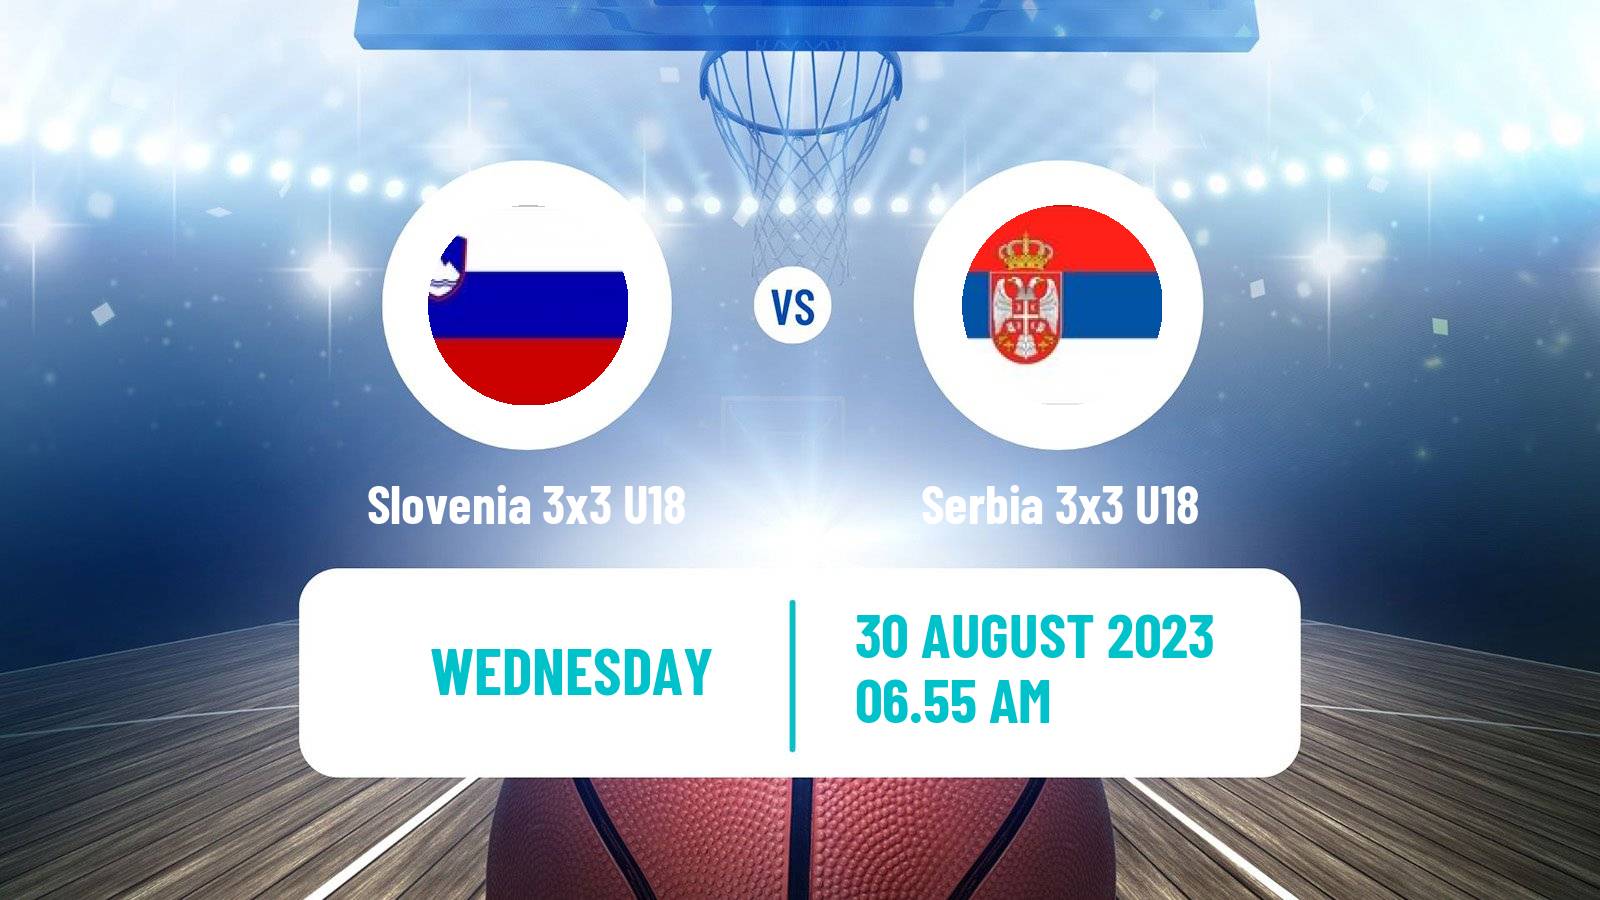 Basketball World Cup Basketball 3x3 U18 Slovenia 3x3 U18 - Serbia 3x3 U18